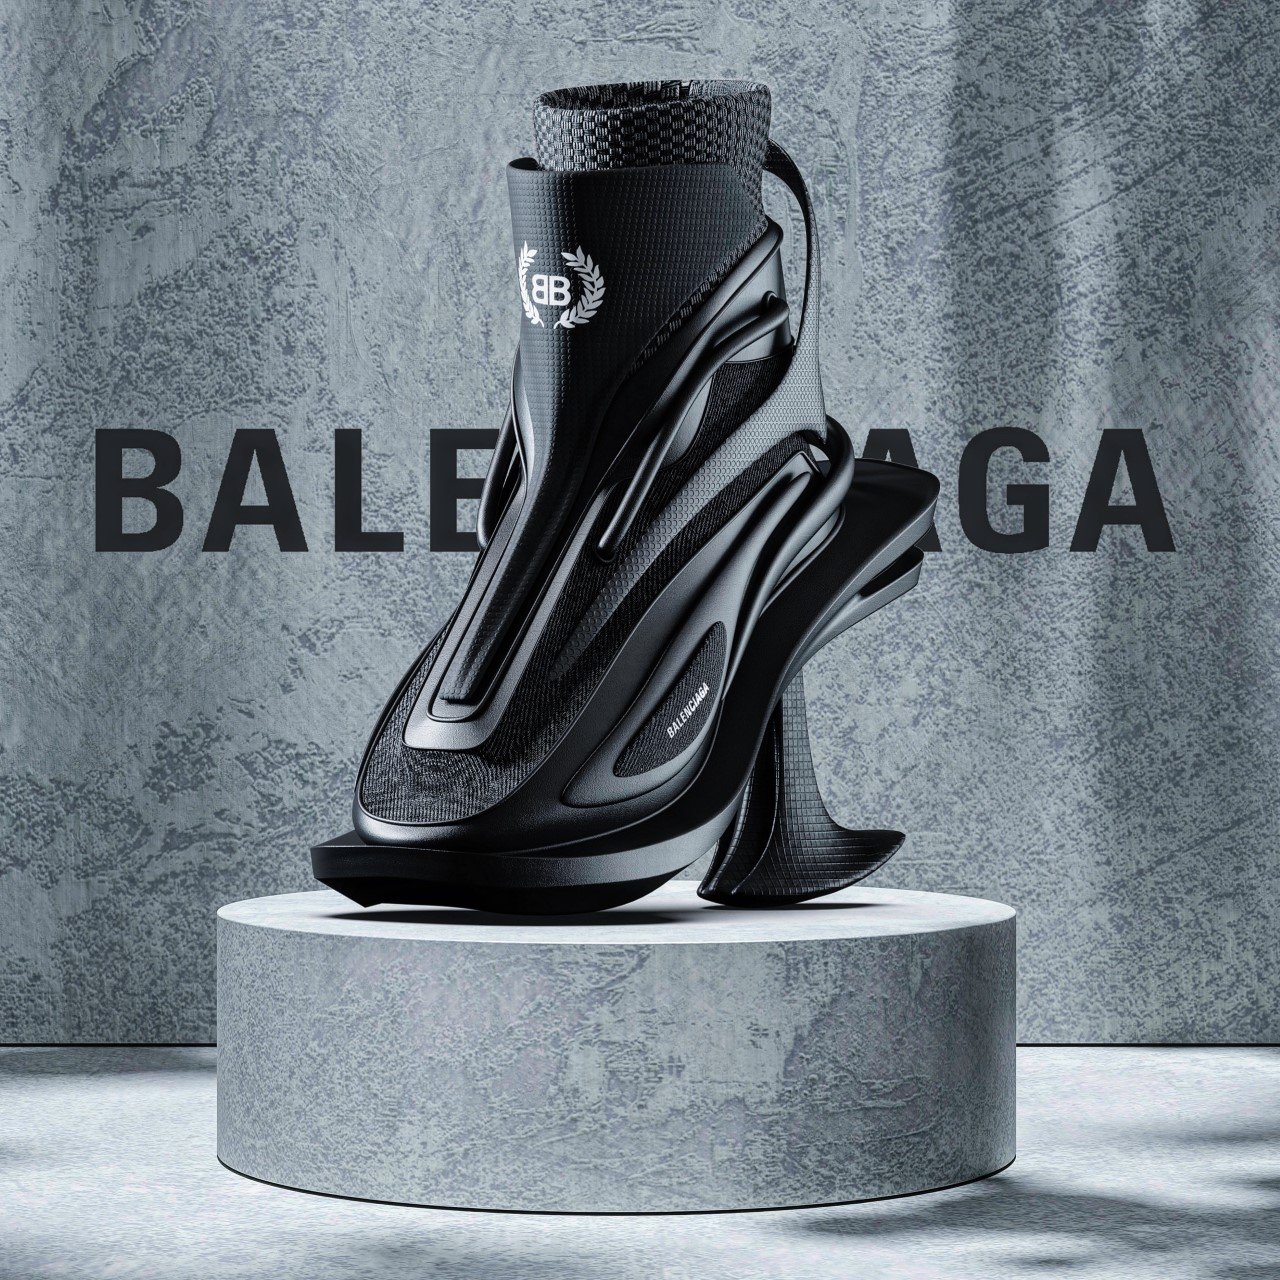 Top 5 futuristic footwear designs for sneakerheads to go gaga over ...